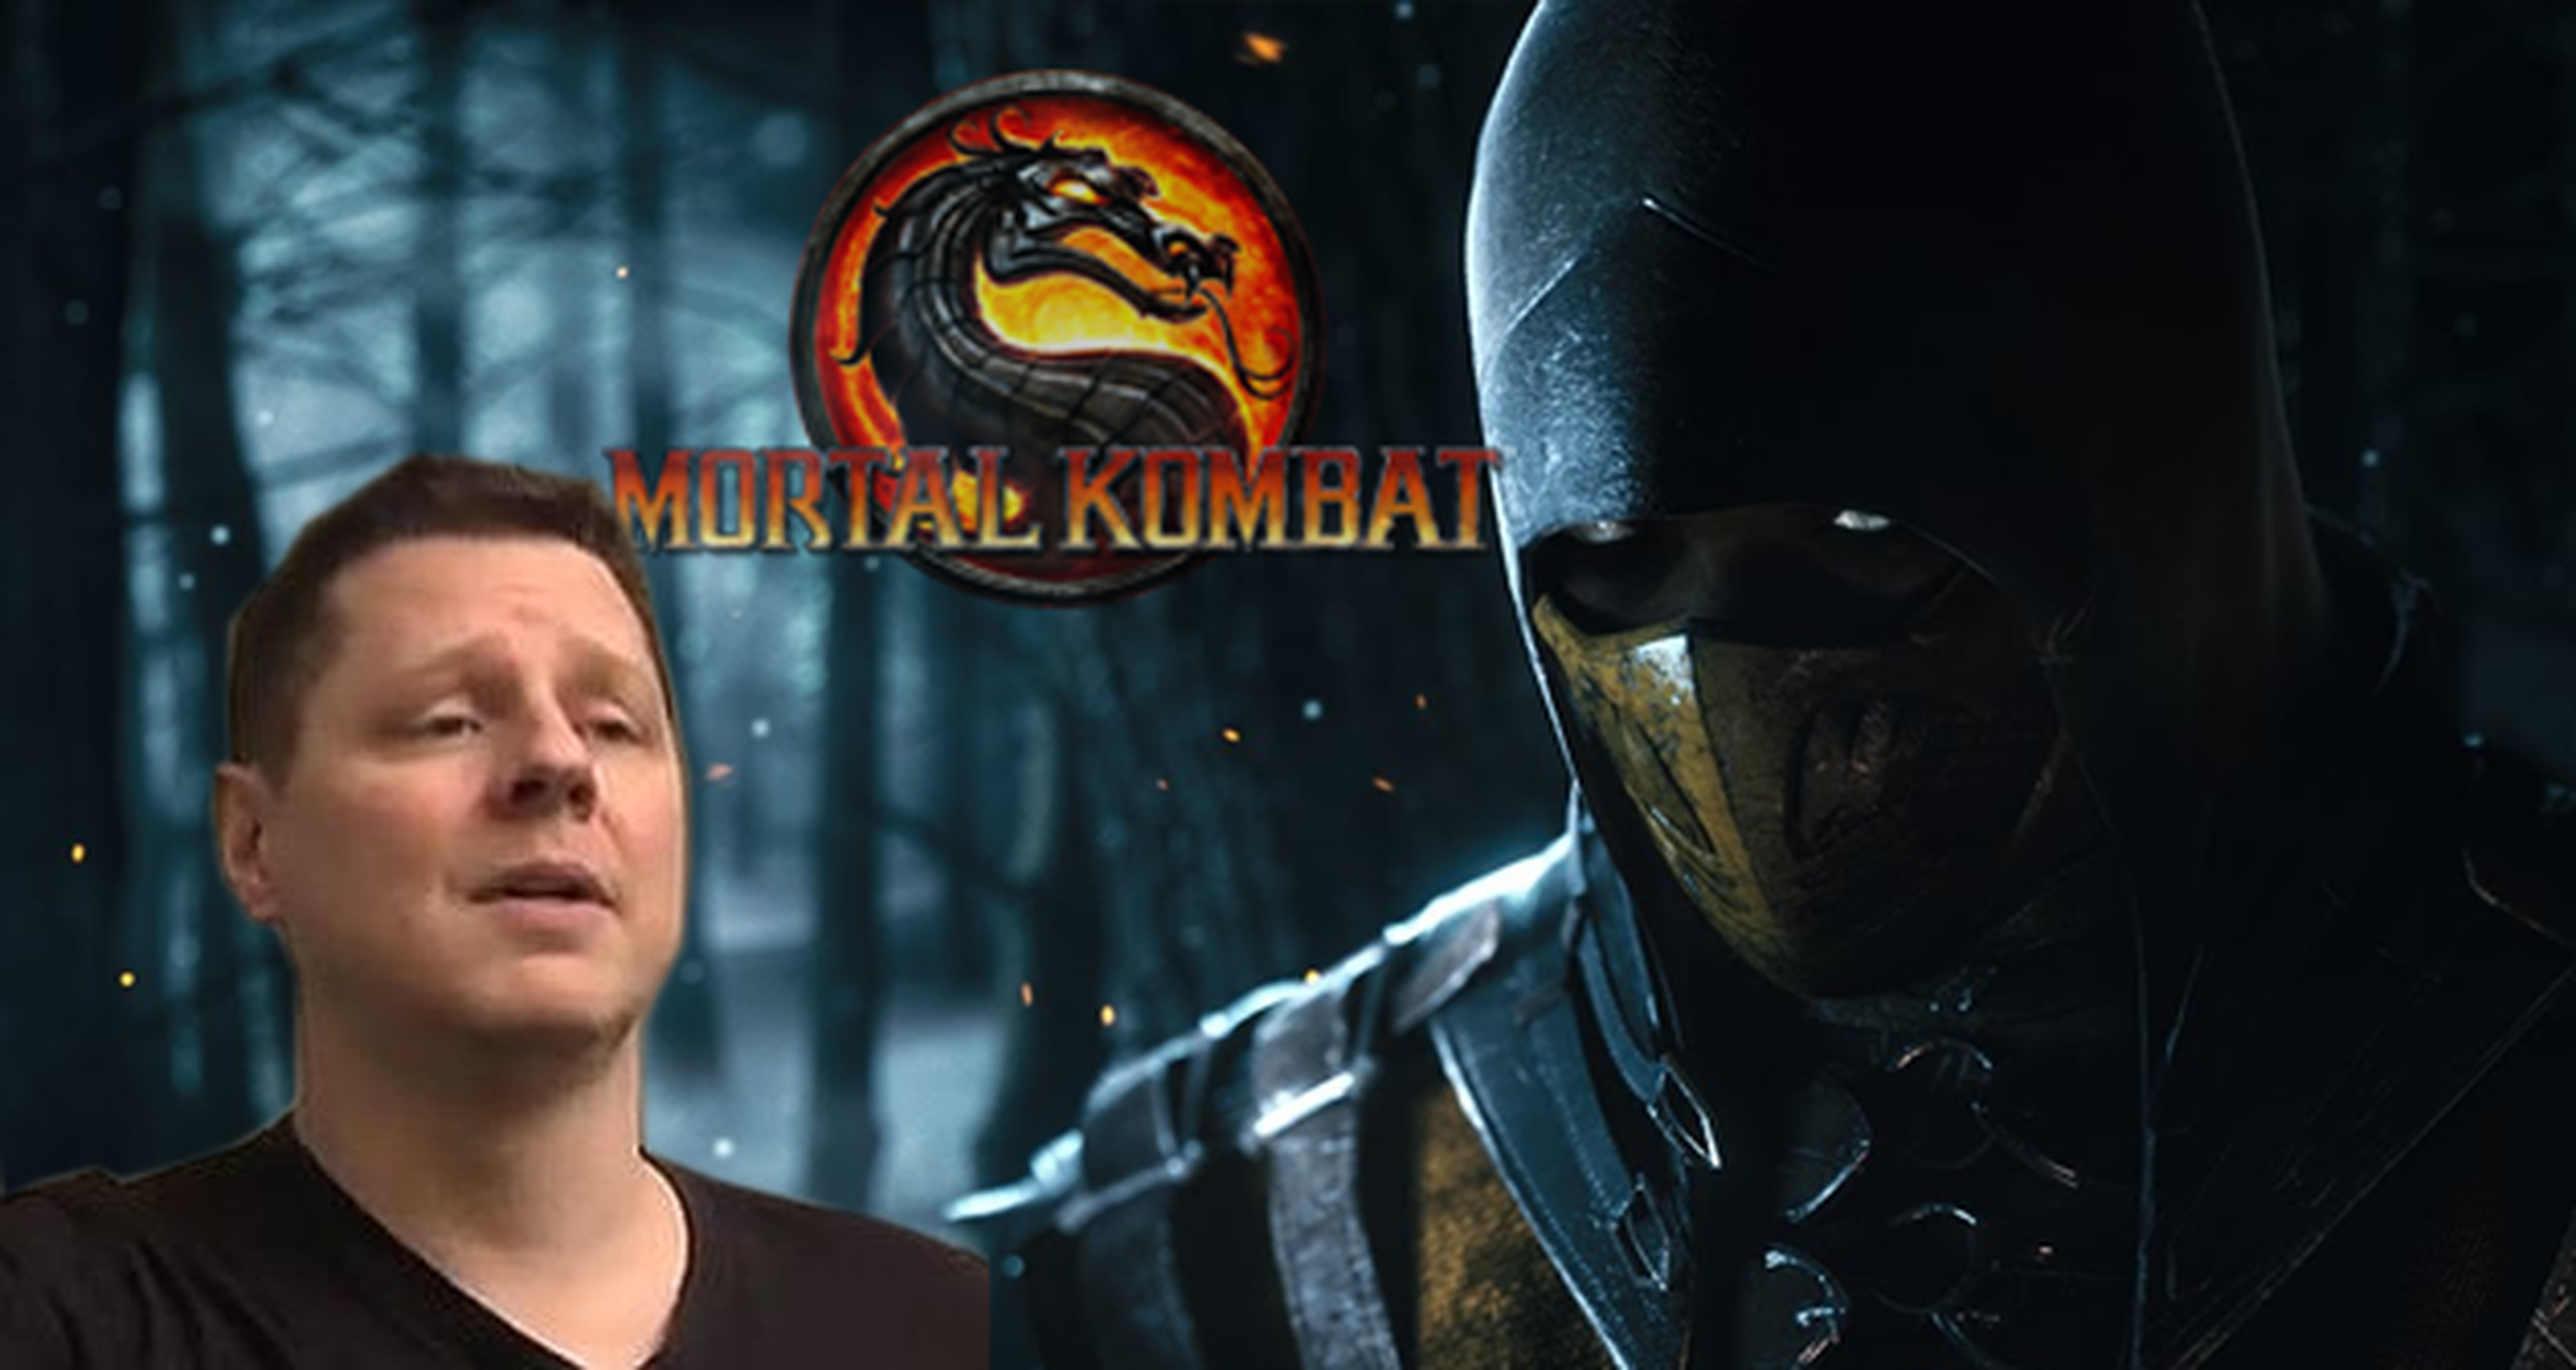 El productor de Mortal Kombat amenazado en Twitter